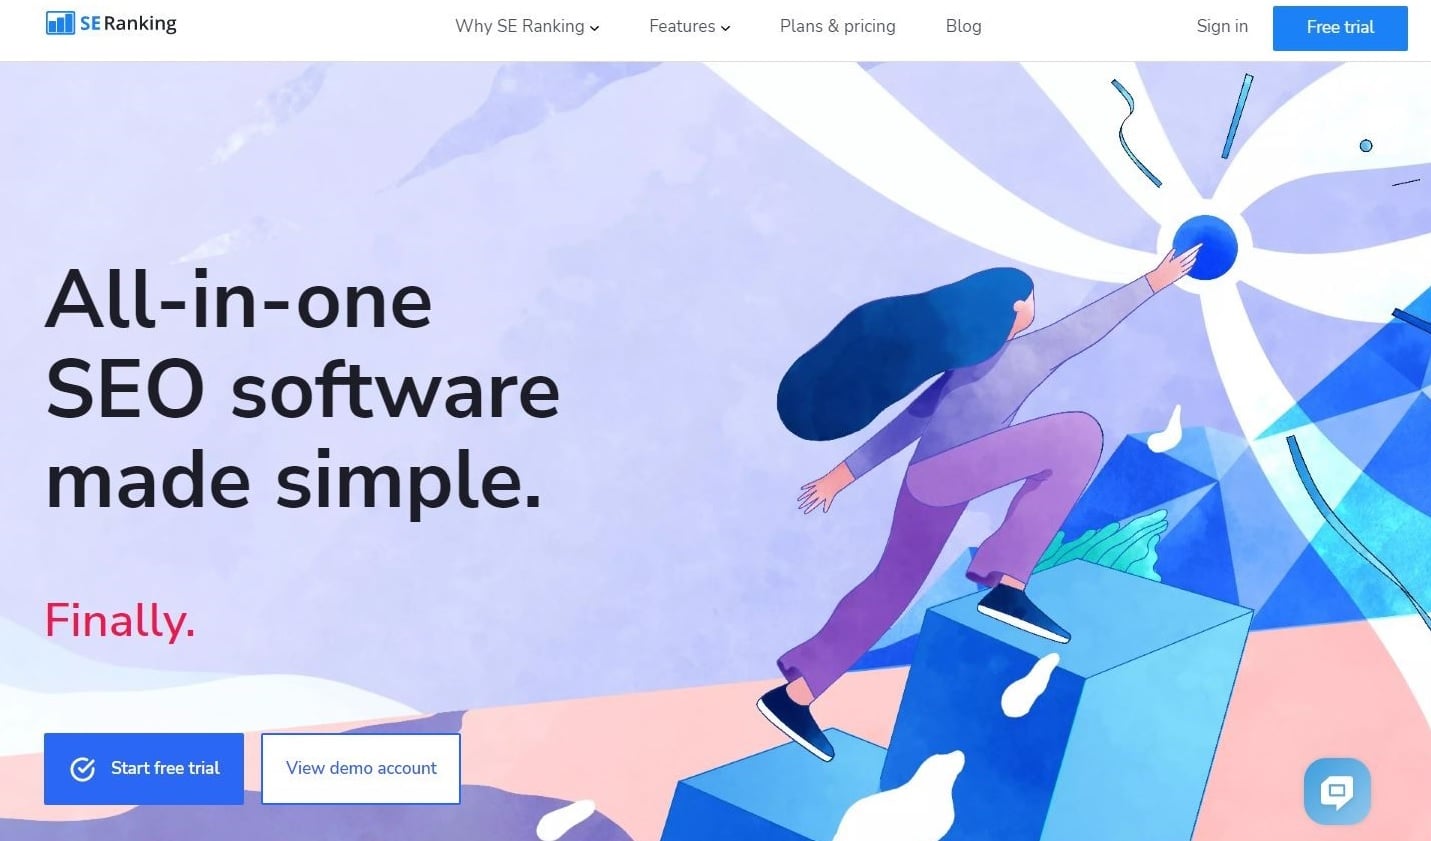 Die SE Ranking Homepage mit dem Slogan "All-in-one SEO software made simple."